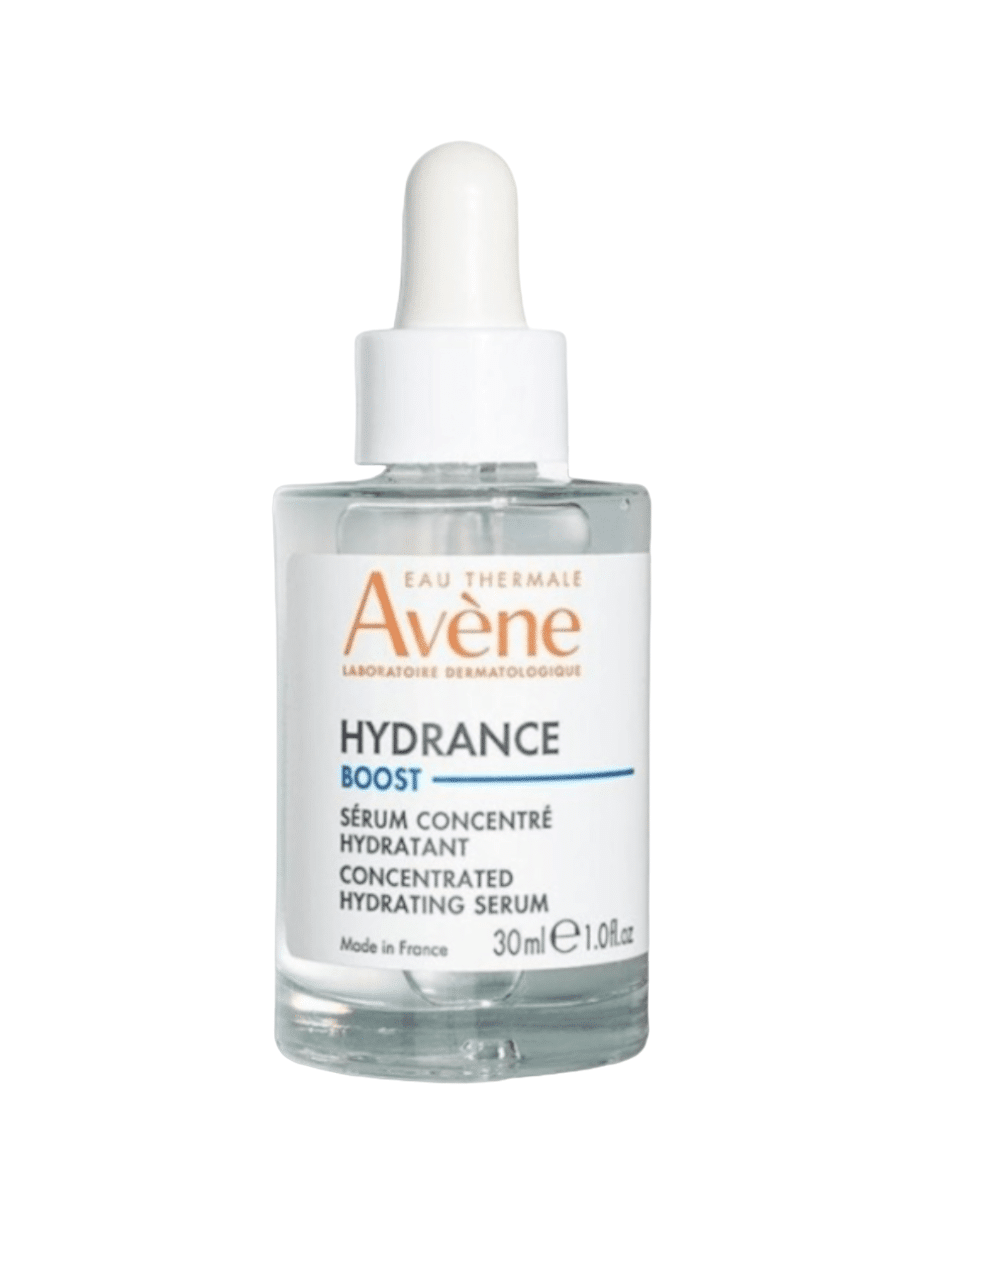 Avène - Hydrance Intense Rehydrating Serum 30ml is a highly hydrating serum designed to intensely moisturize the skin.